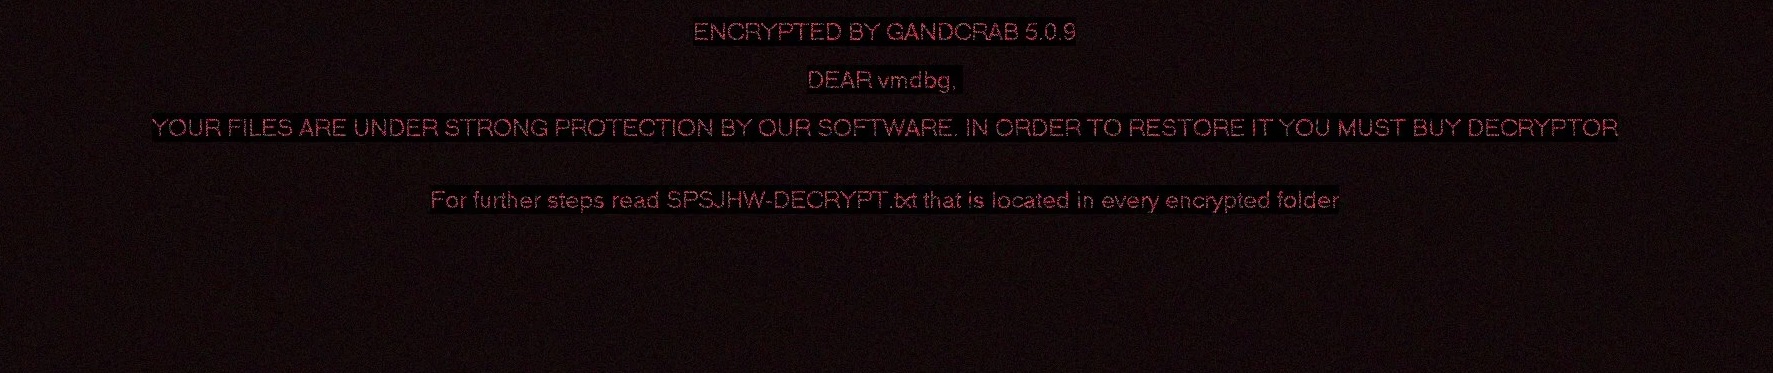 gandcrab 5.0.9 cryptovirus Ransomware Desktop-Hintergrund